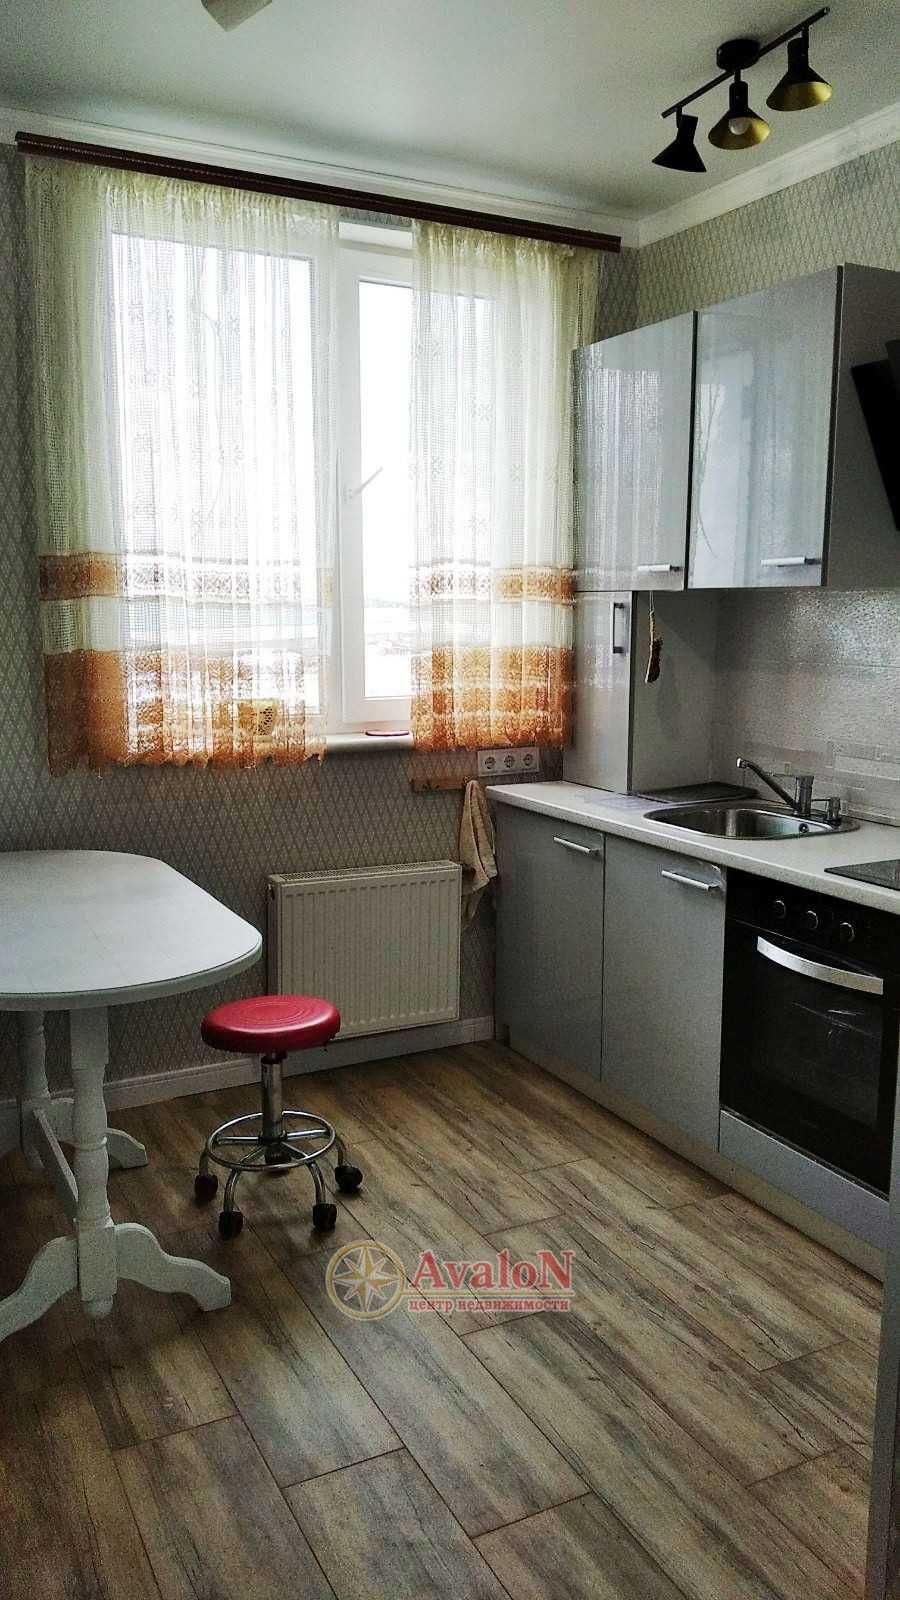 Предлагаем однокомнатную квартиру в кирпичном доме на Сахарова.